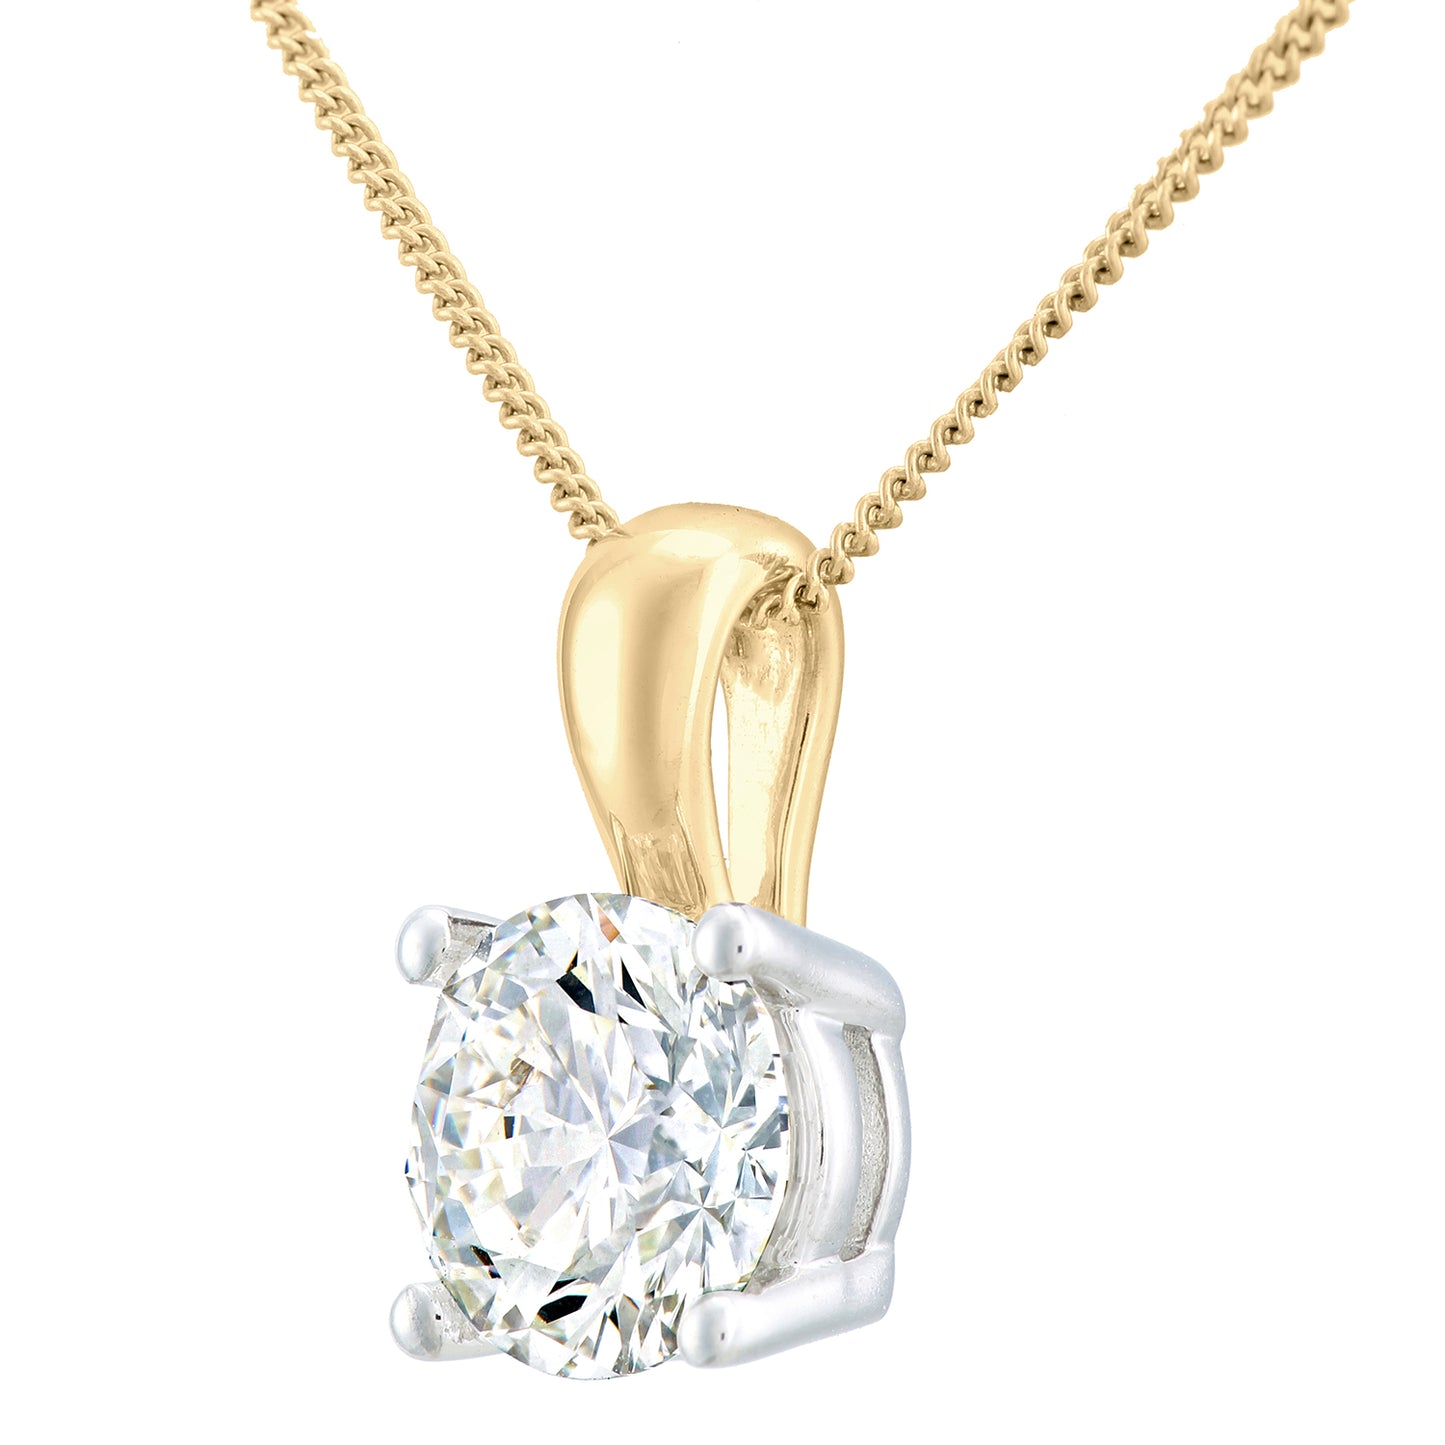 18ct Gold  Round 2ct Diamond Solitaire Pendant Necklace 18 inch - PP0AXL4970Y18JPK